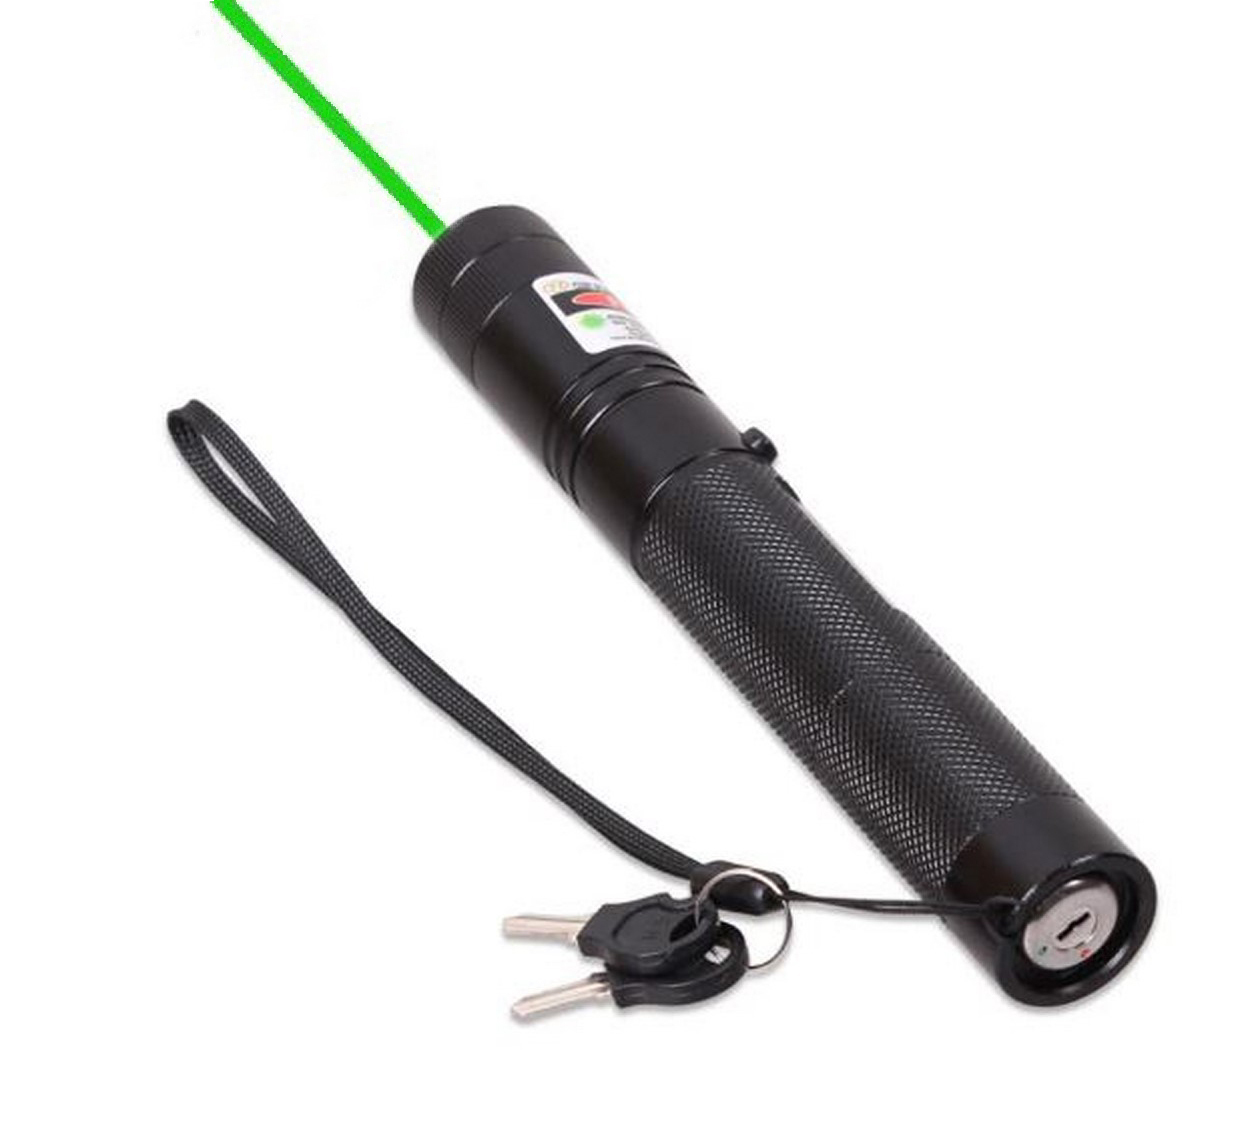 Зеленый луч указка. Лазерная указка Green Laser 303 (черный). Мощная лазерная указка зеленый Луч 303. Лазерная указка yl-Laser 303. Указка лазер зеленый Луч Green Laser Pointer 303.